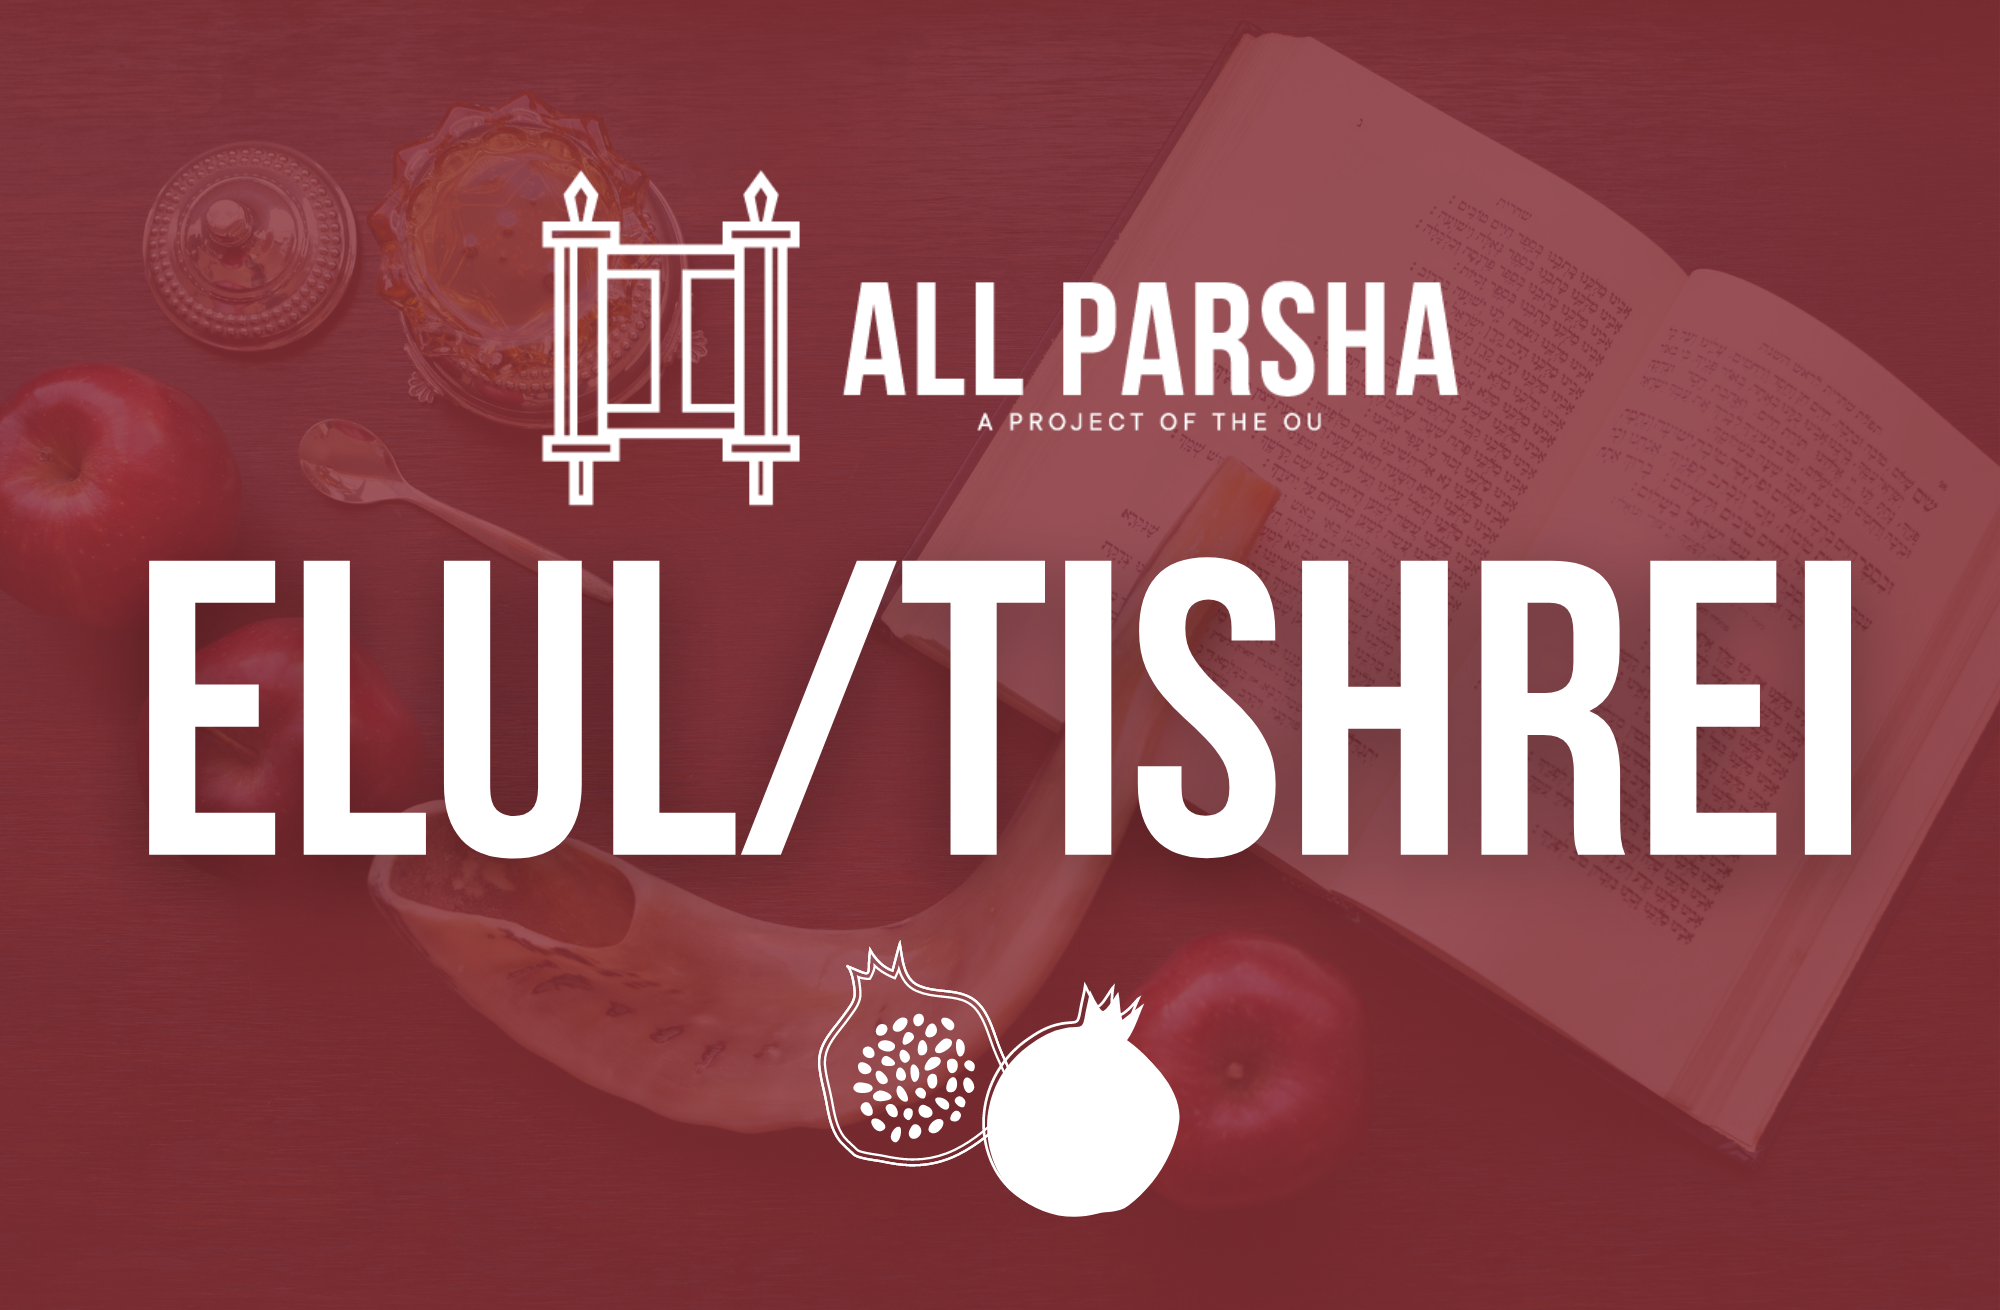 Special Elul/Tishrei All Parsha Content